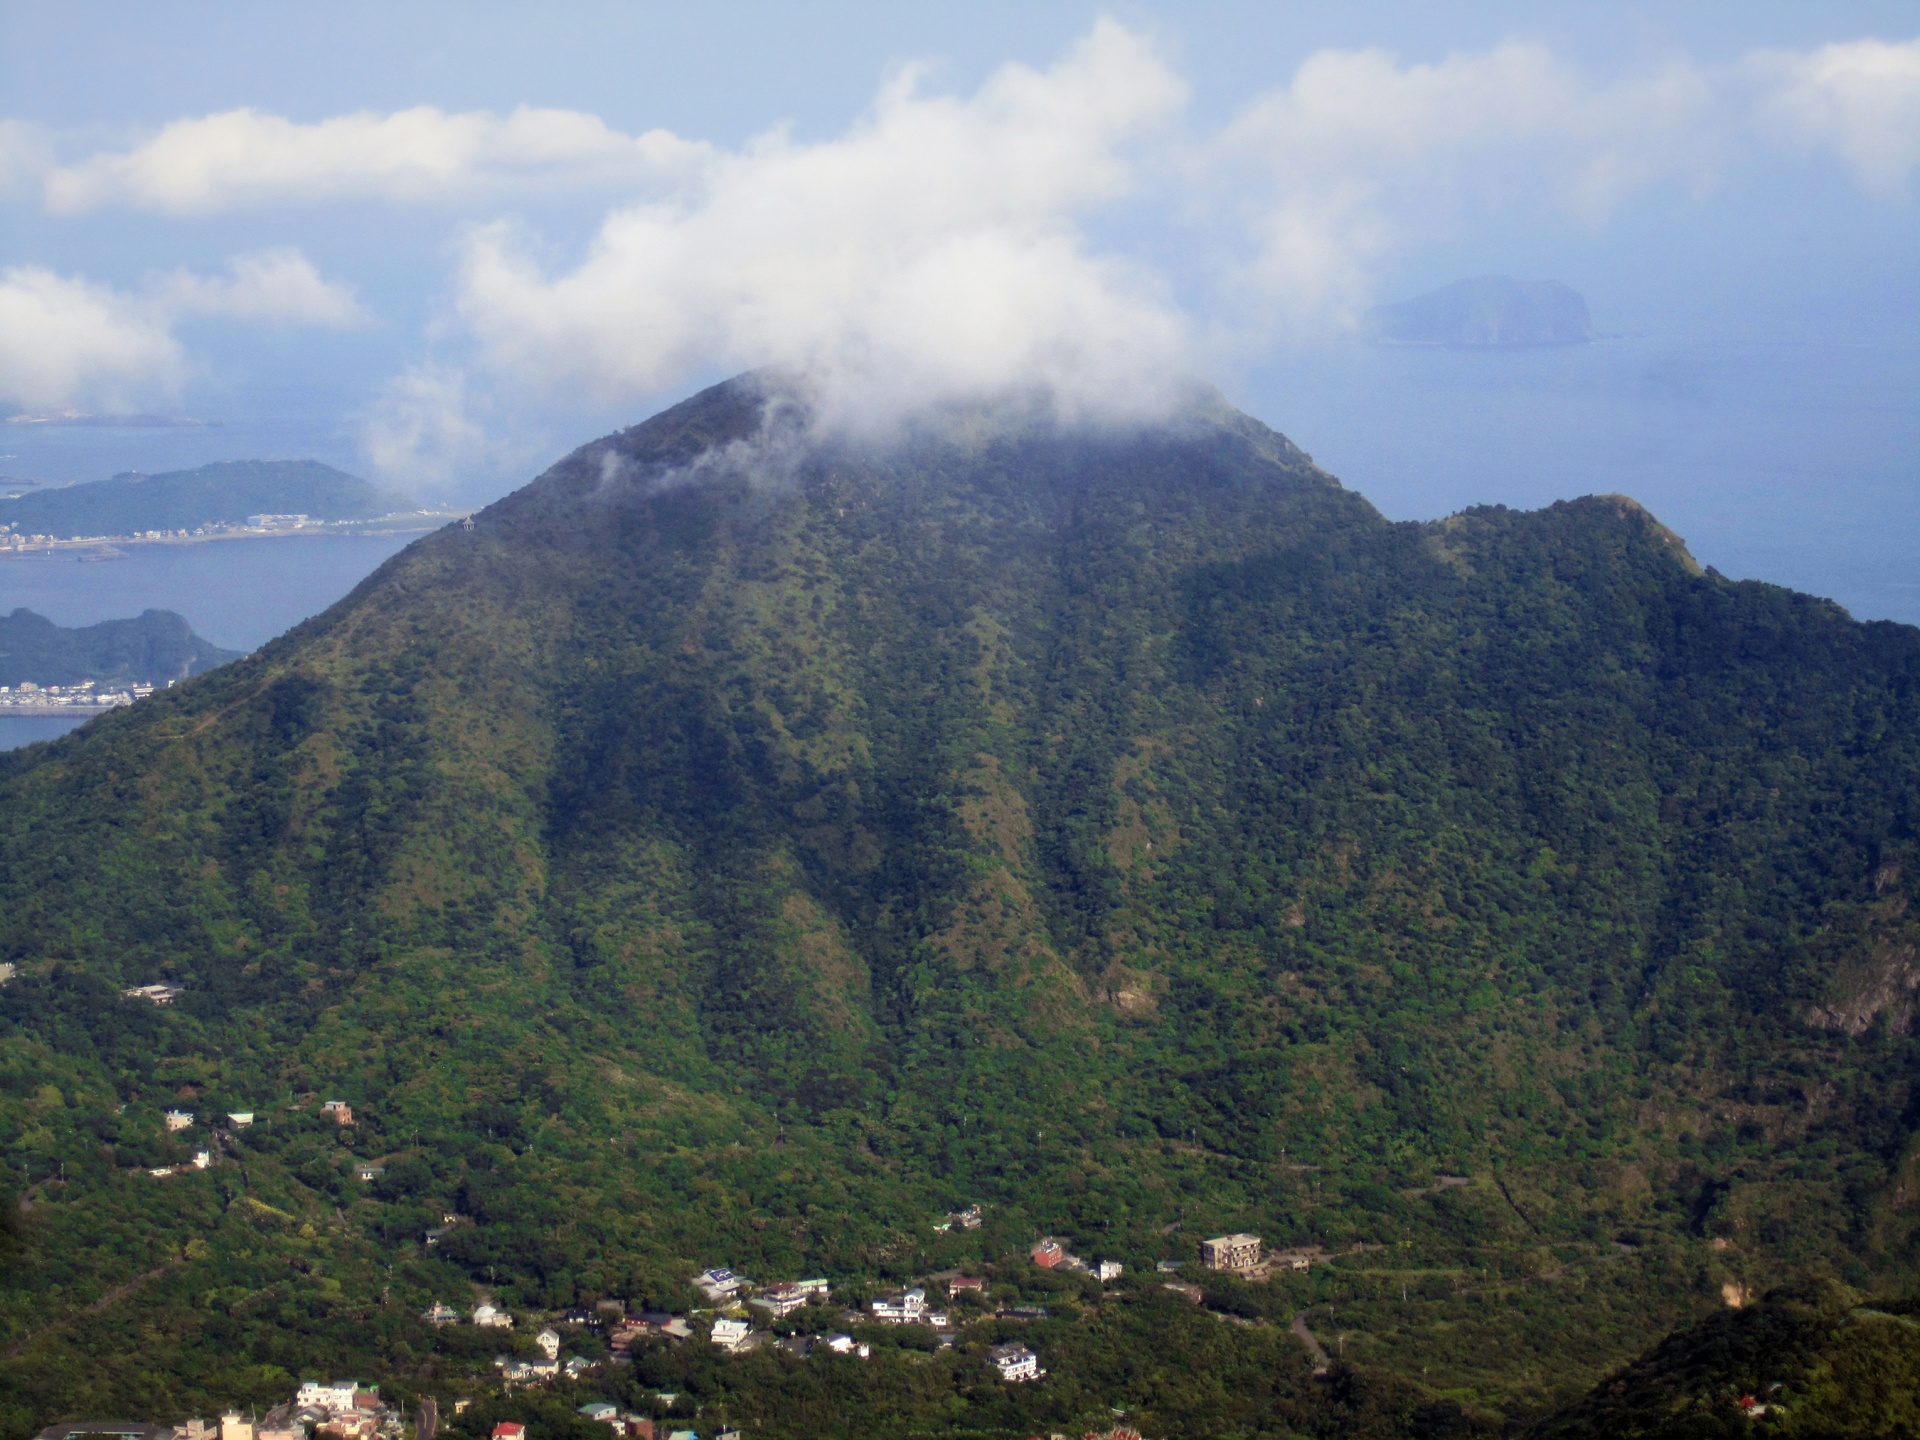 Jilongshan, a peak in the Jilongshan Volcanic Group of extinct or dormant volcanos on the north-east coast of Taiwan